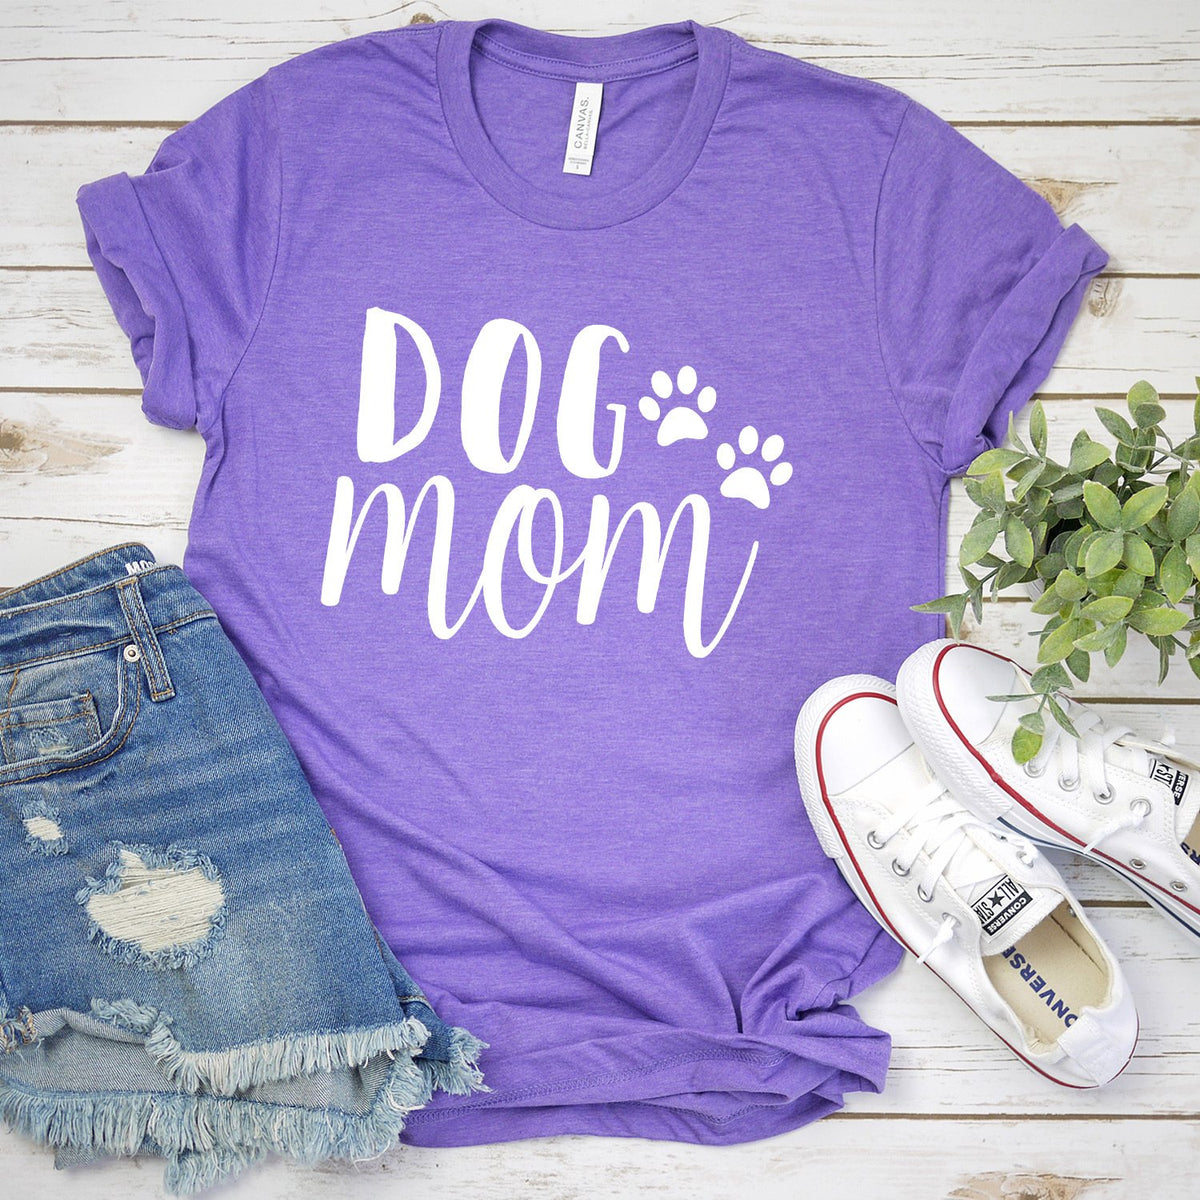 Dog Mom - Short Sleeve Tee Shirt